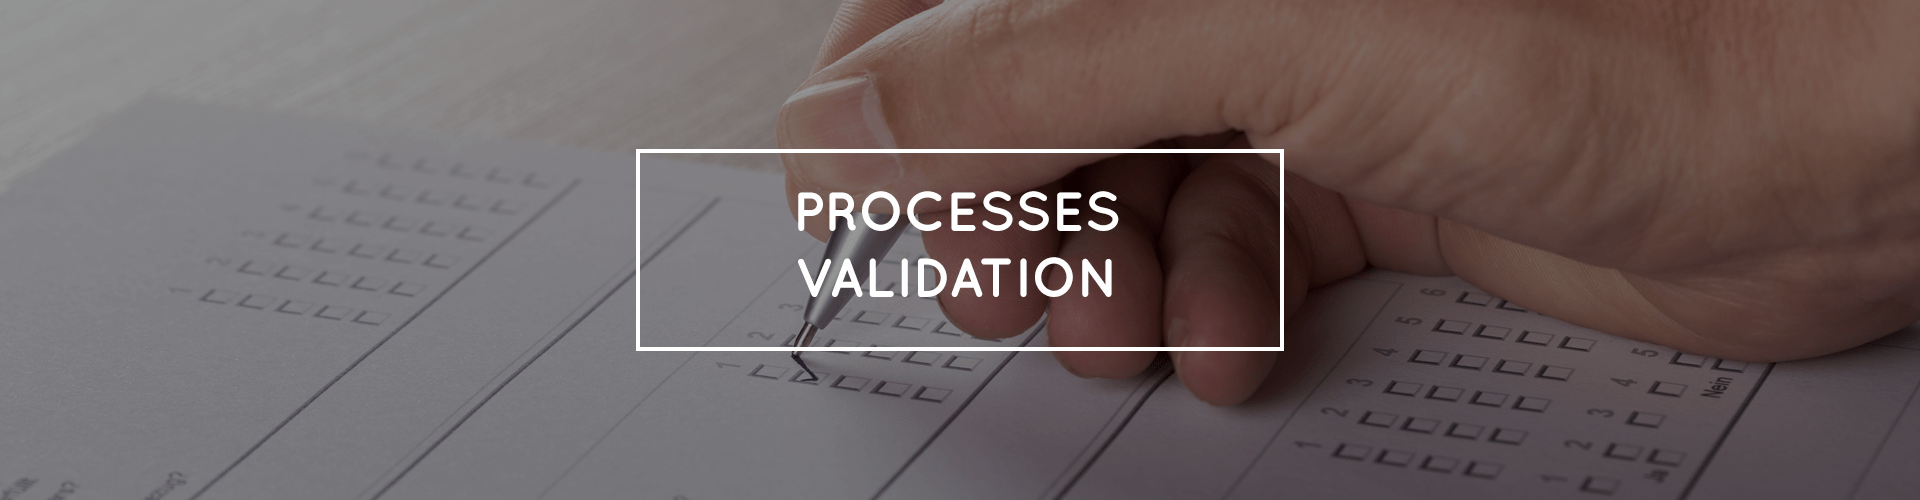 Process validation about medical regulament